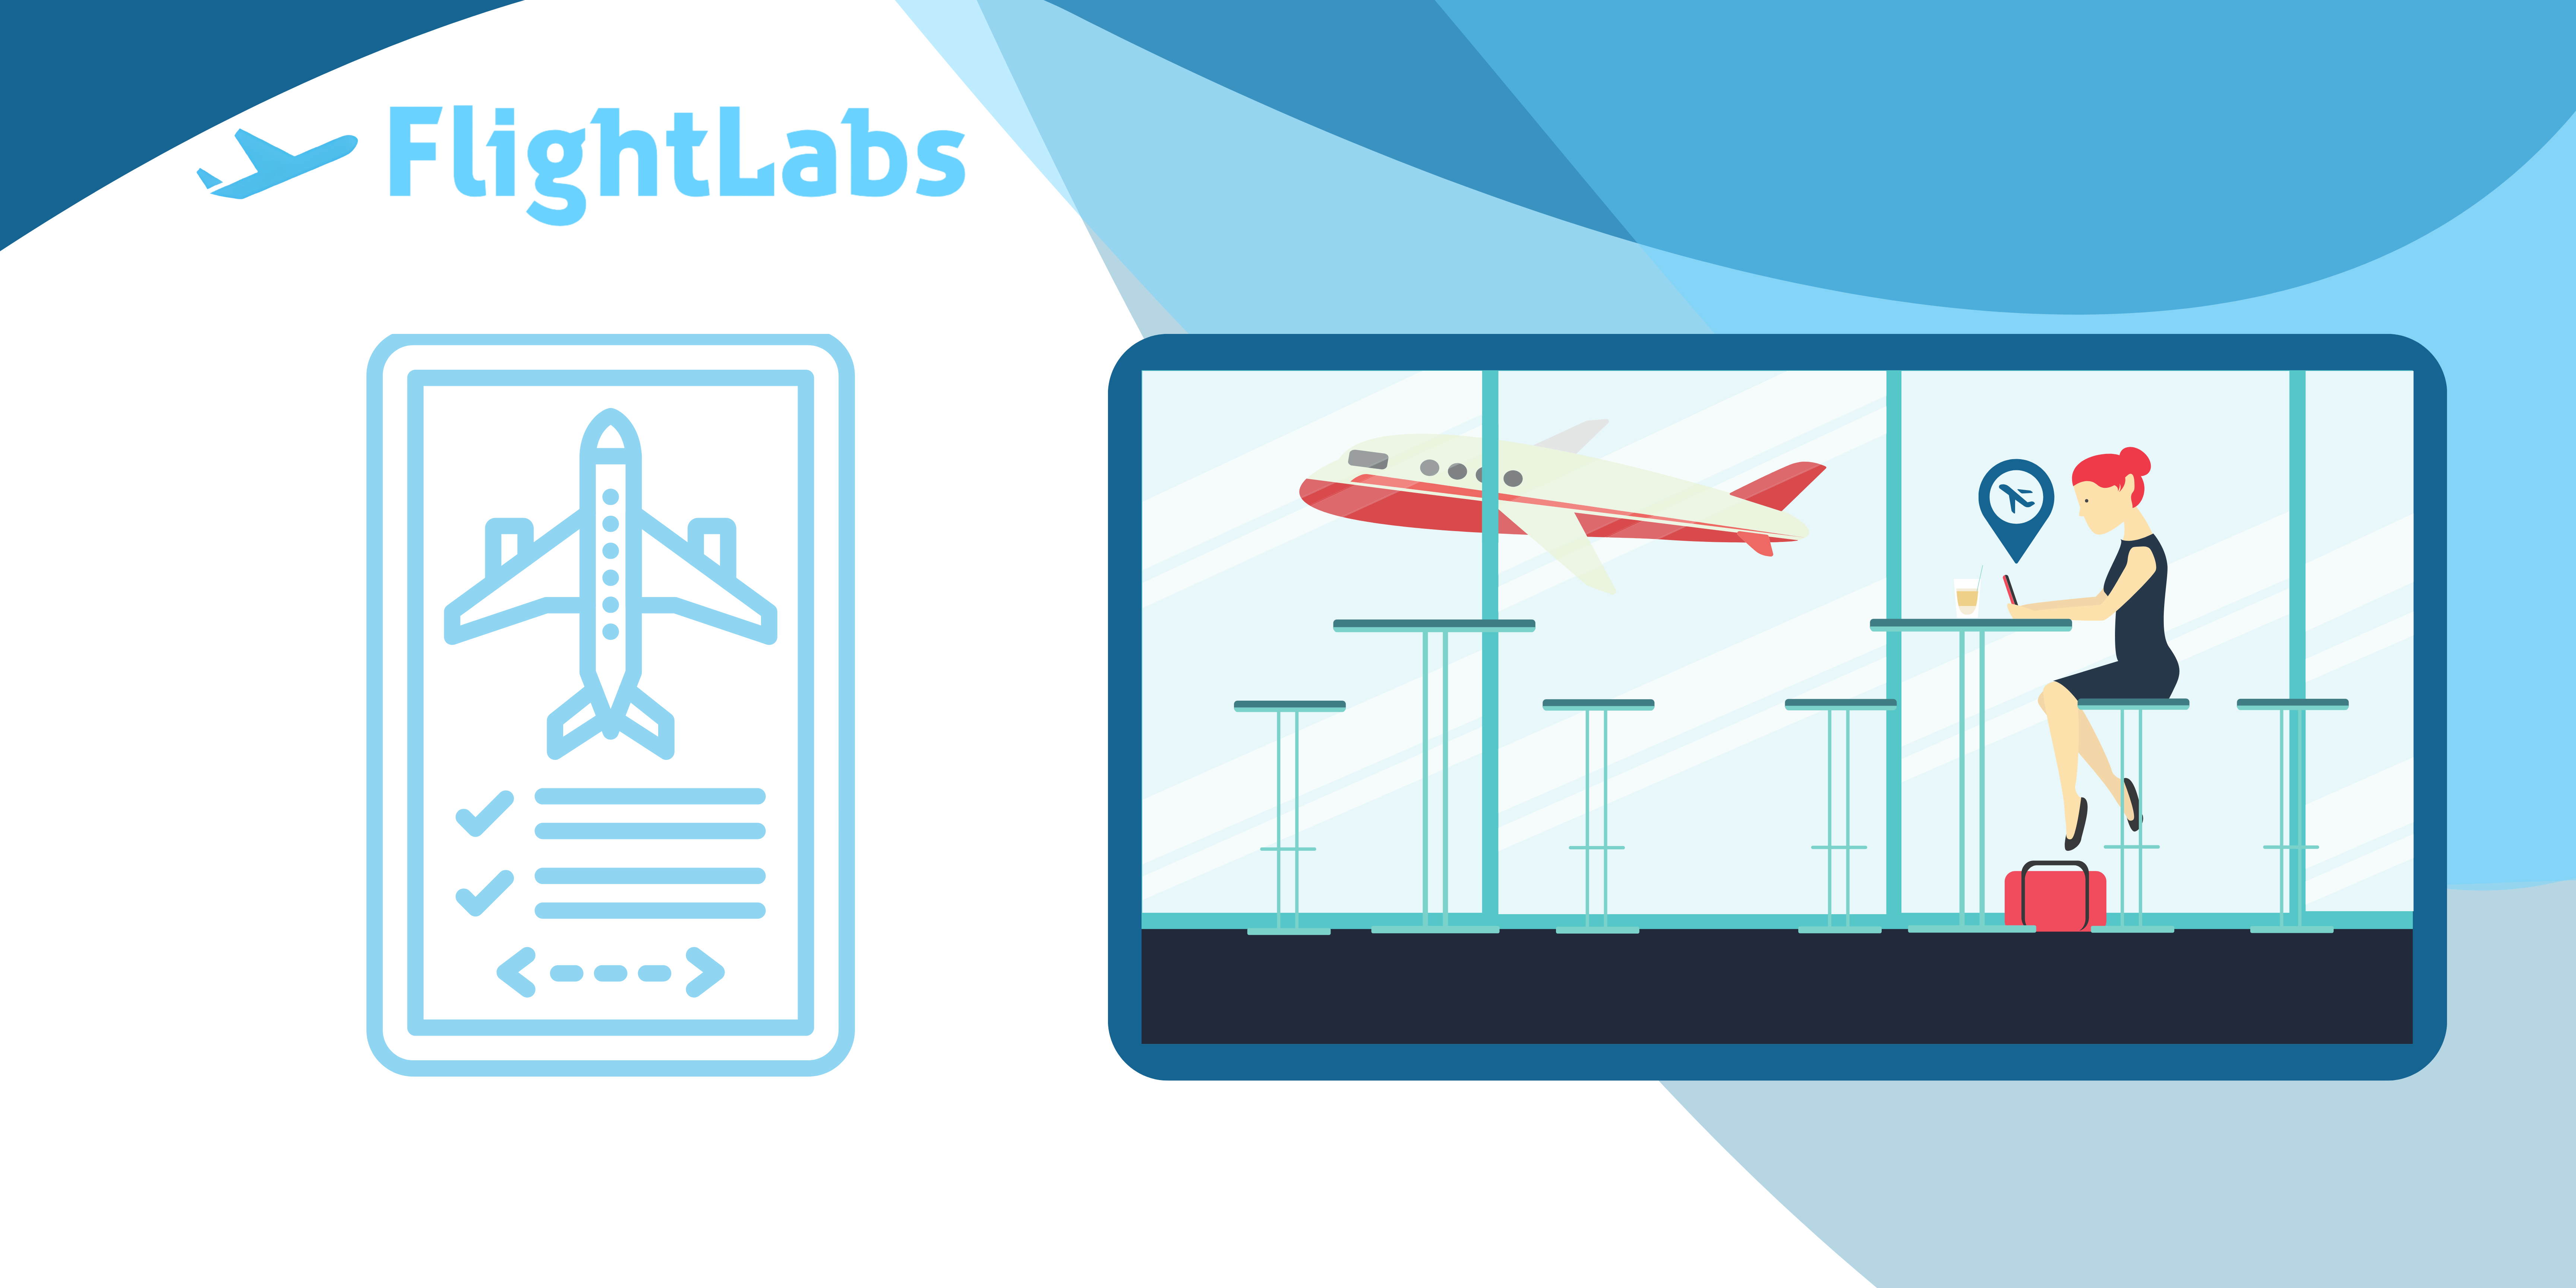 Airplanes API: Developer Friendly Airplane Tracking